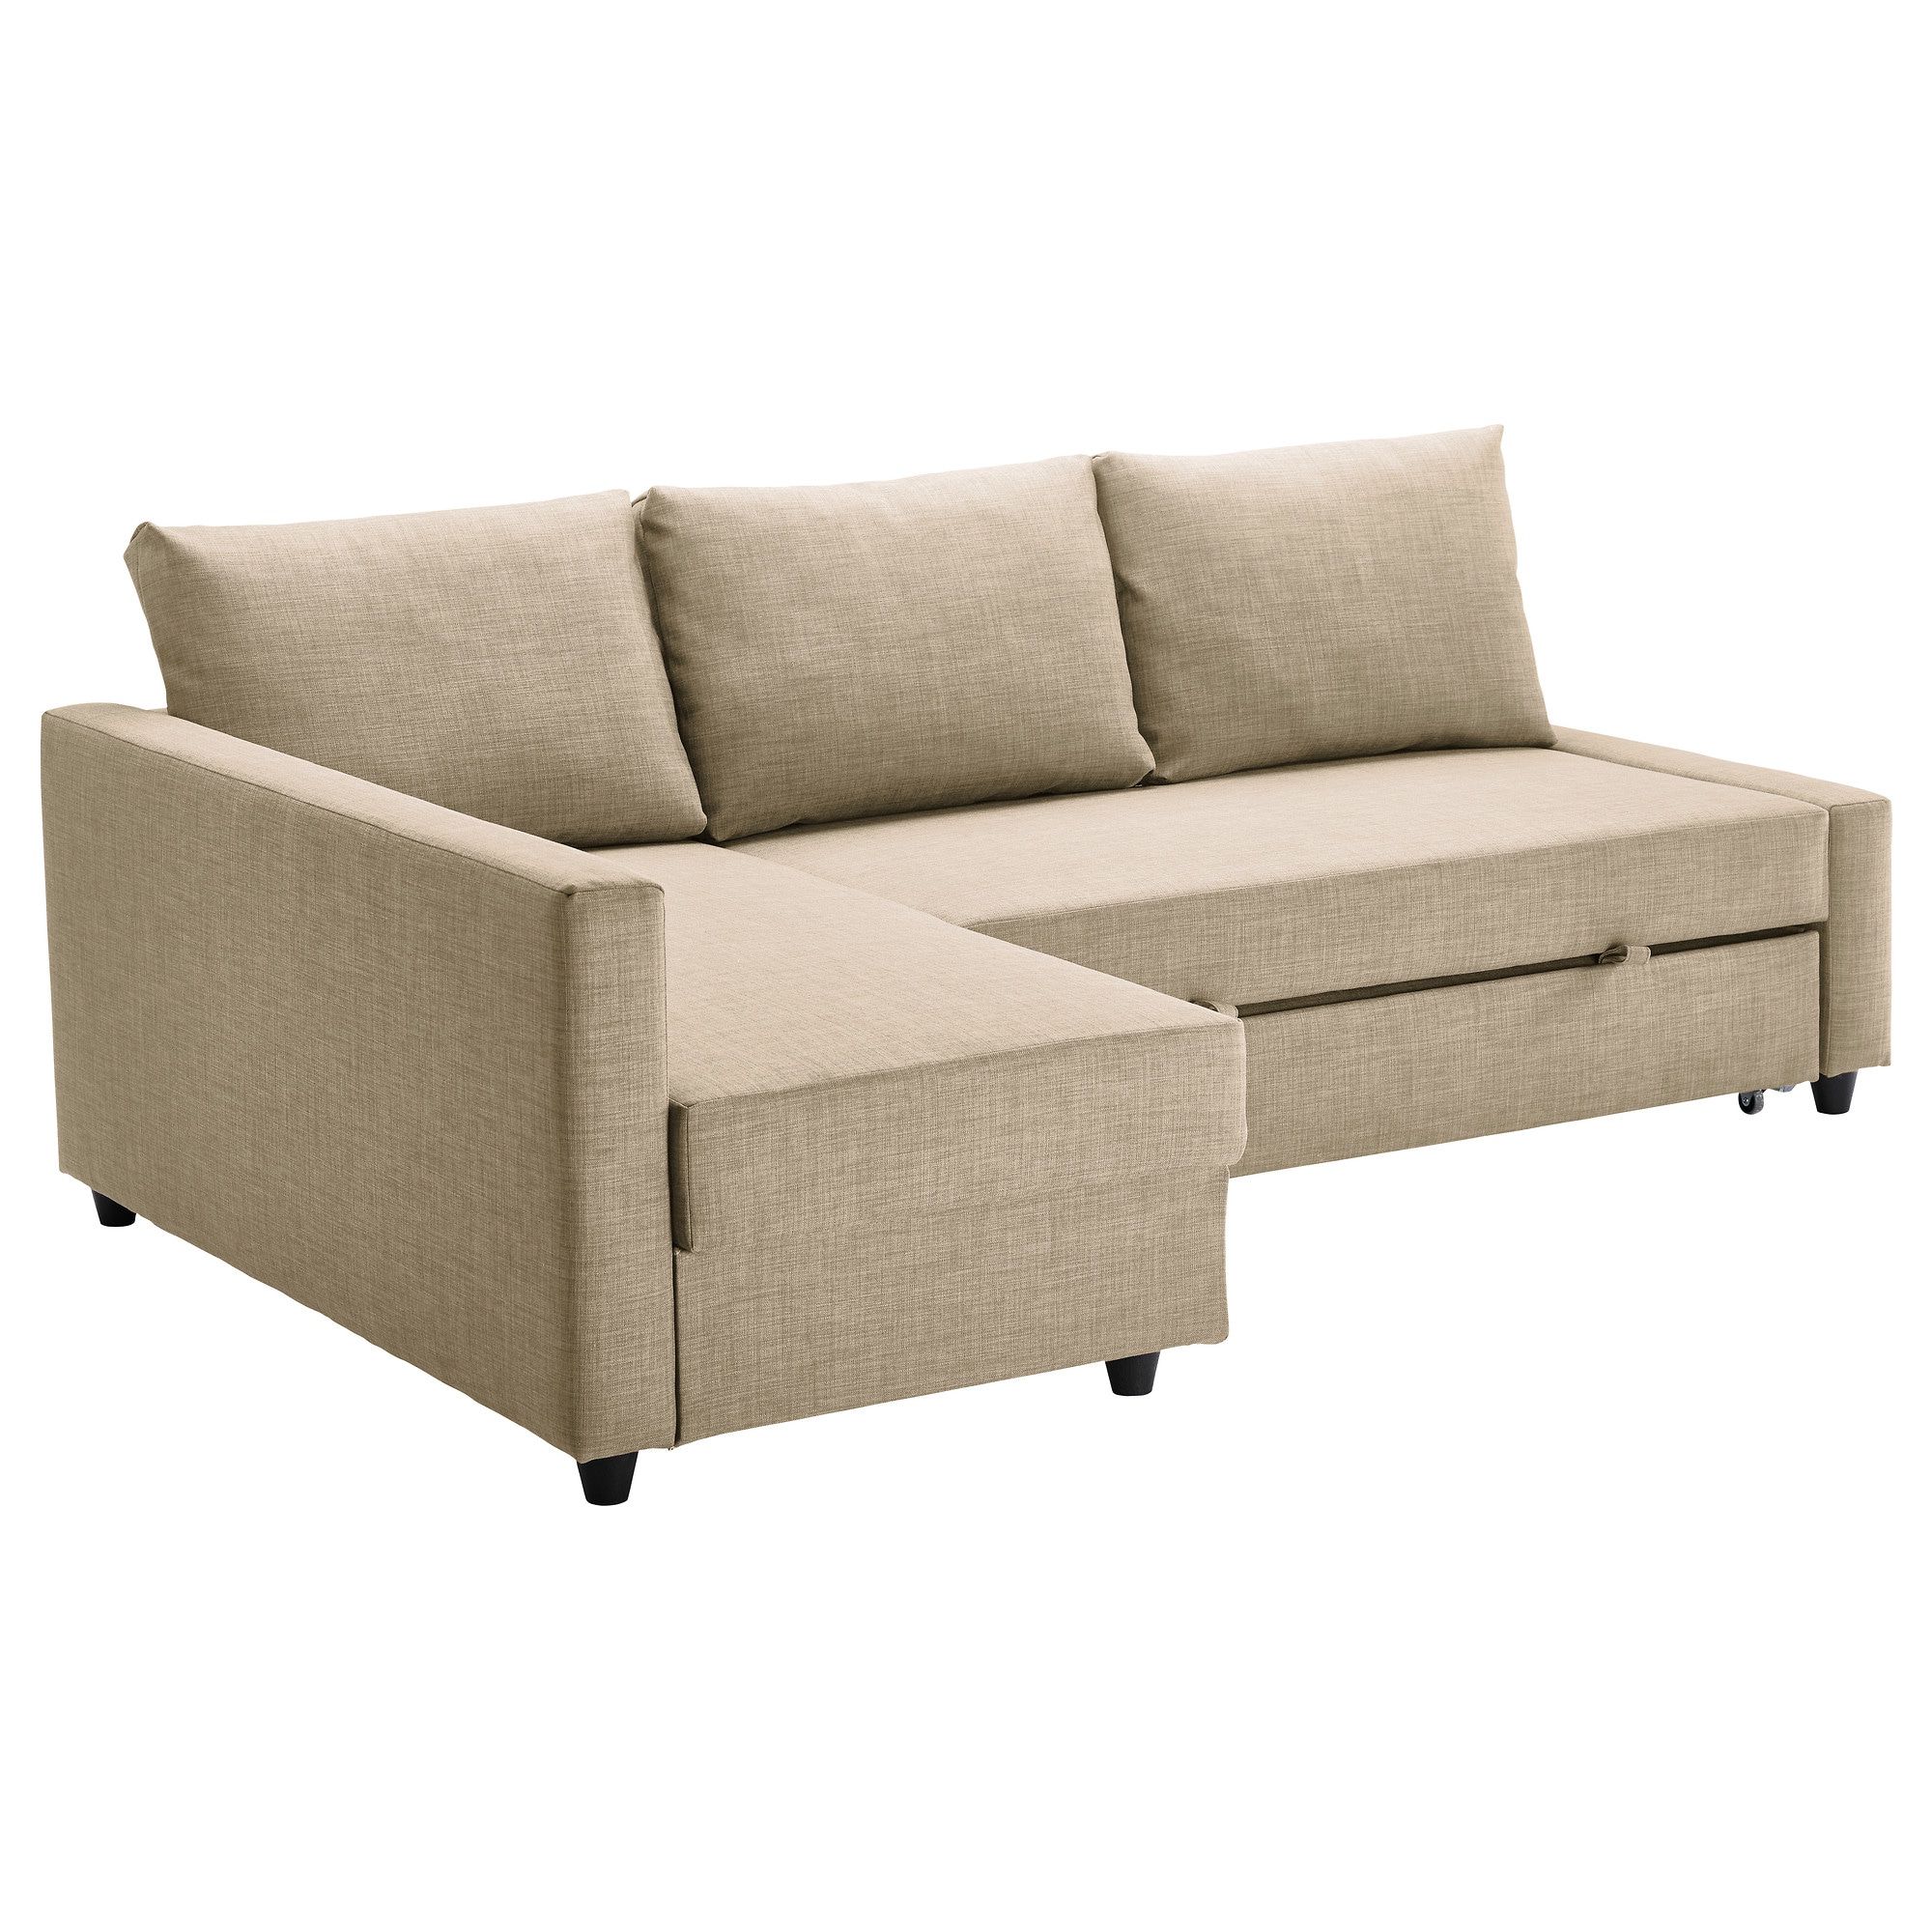 Popular Friheten Corner Sofa Bed With Storage Skiftebo Beige – Ikea In Ikea Sofa Chairs (View 11 of 20)